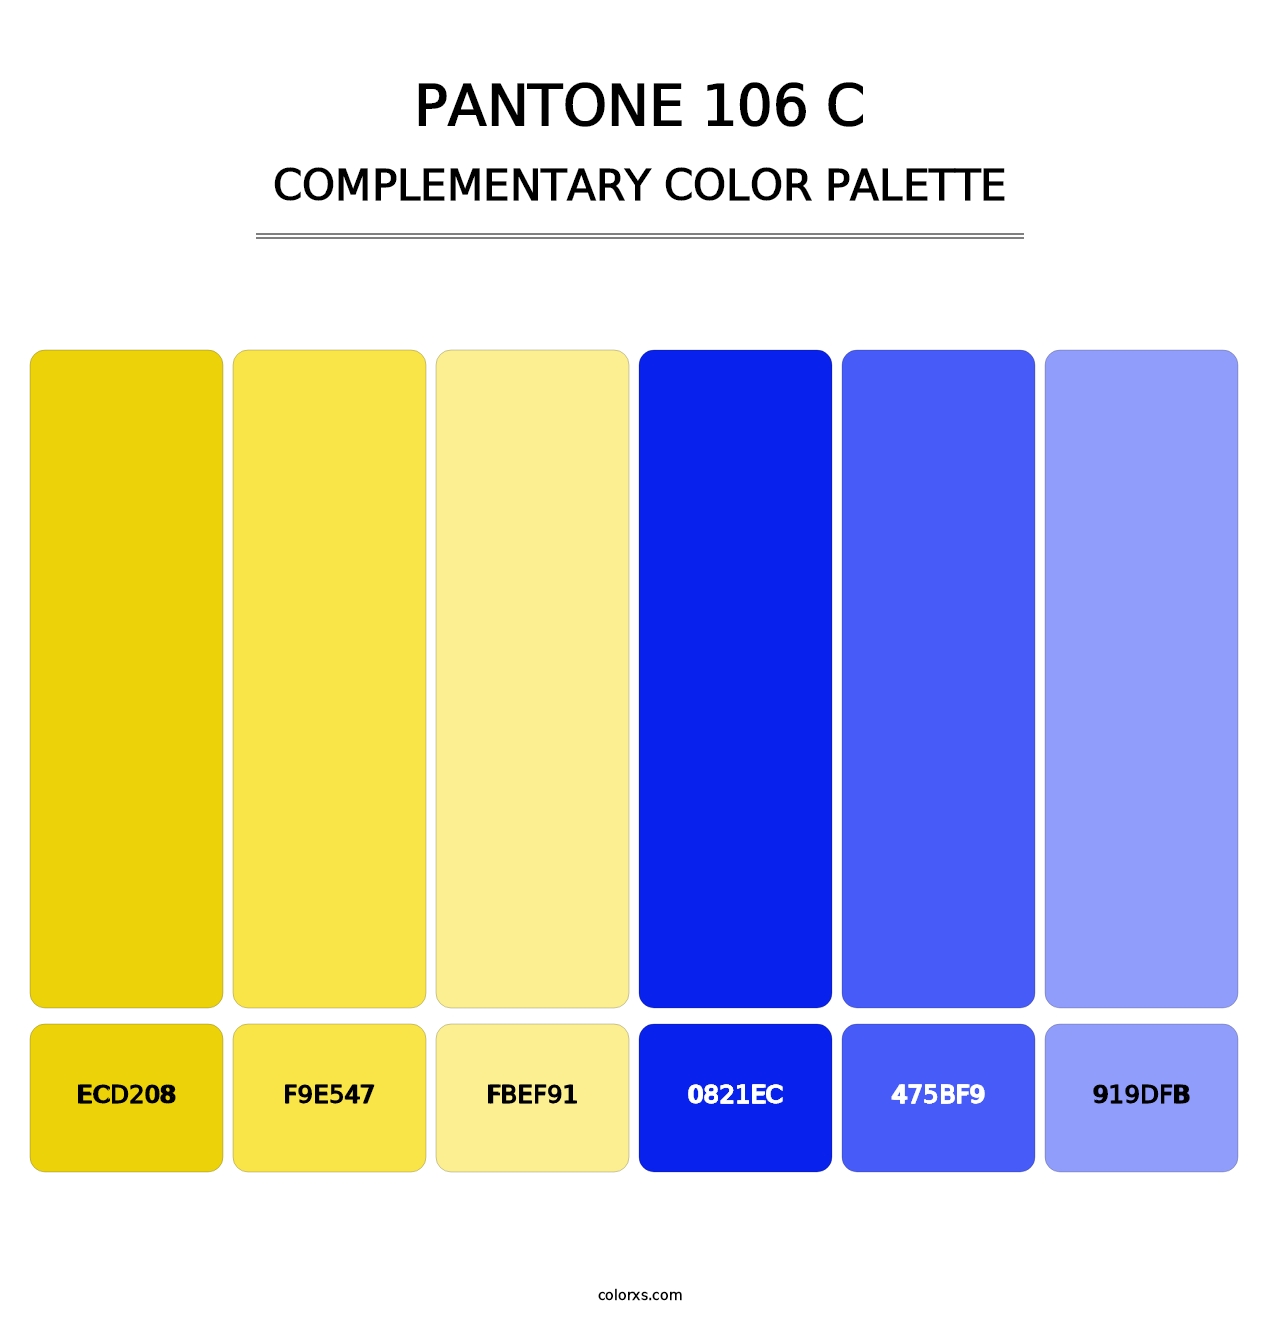 PANTONE 106 C - Complementary Color Palette